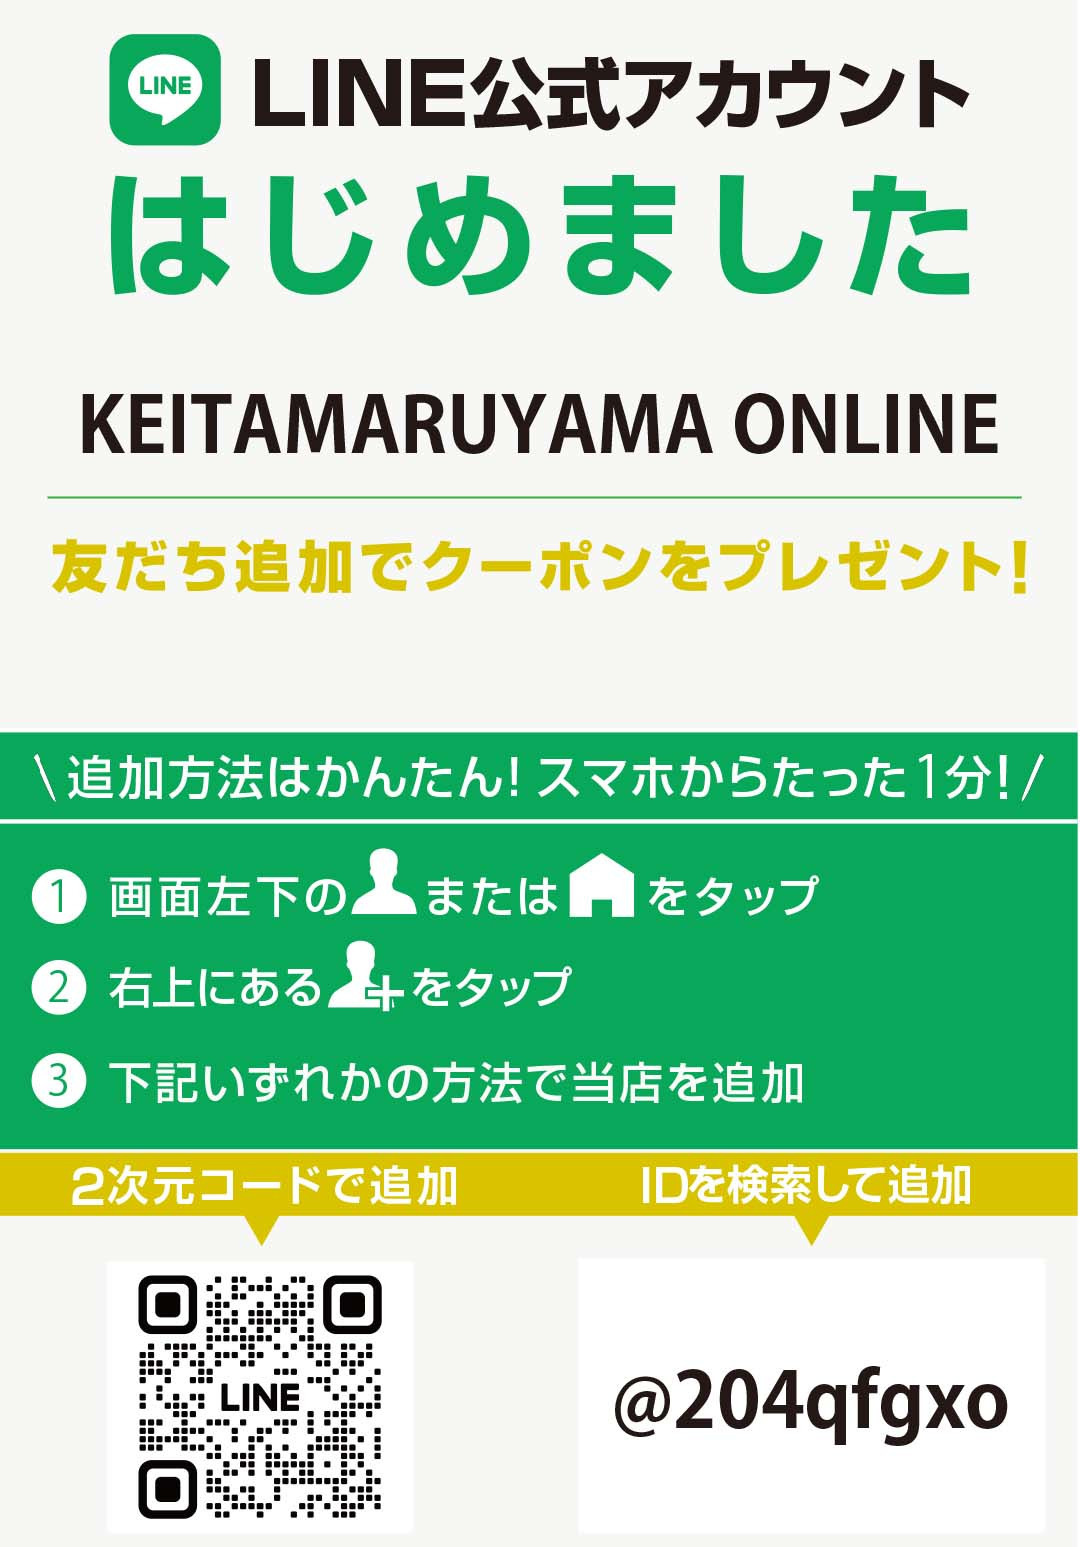 KEITAMARUYAMA公式LINEアカウントはじめました☆